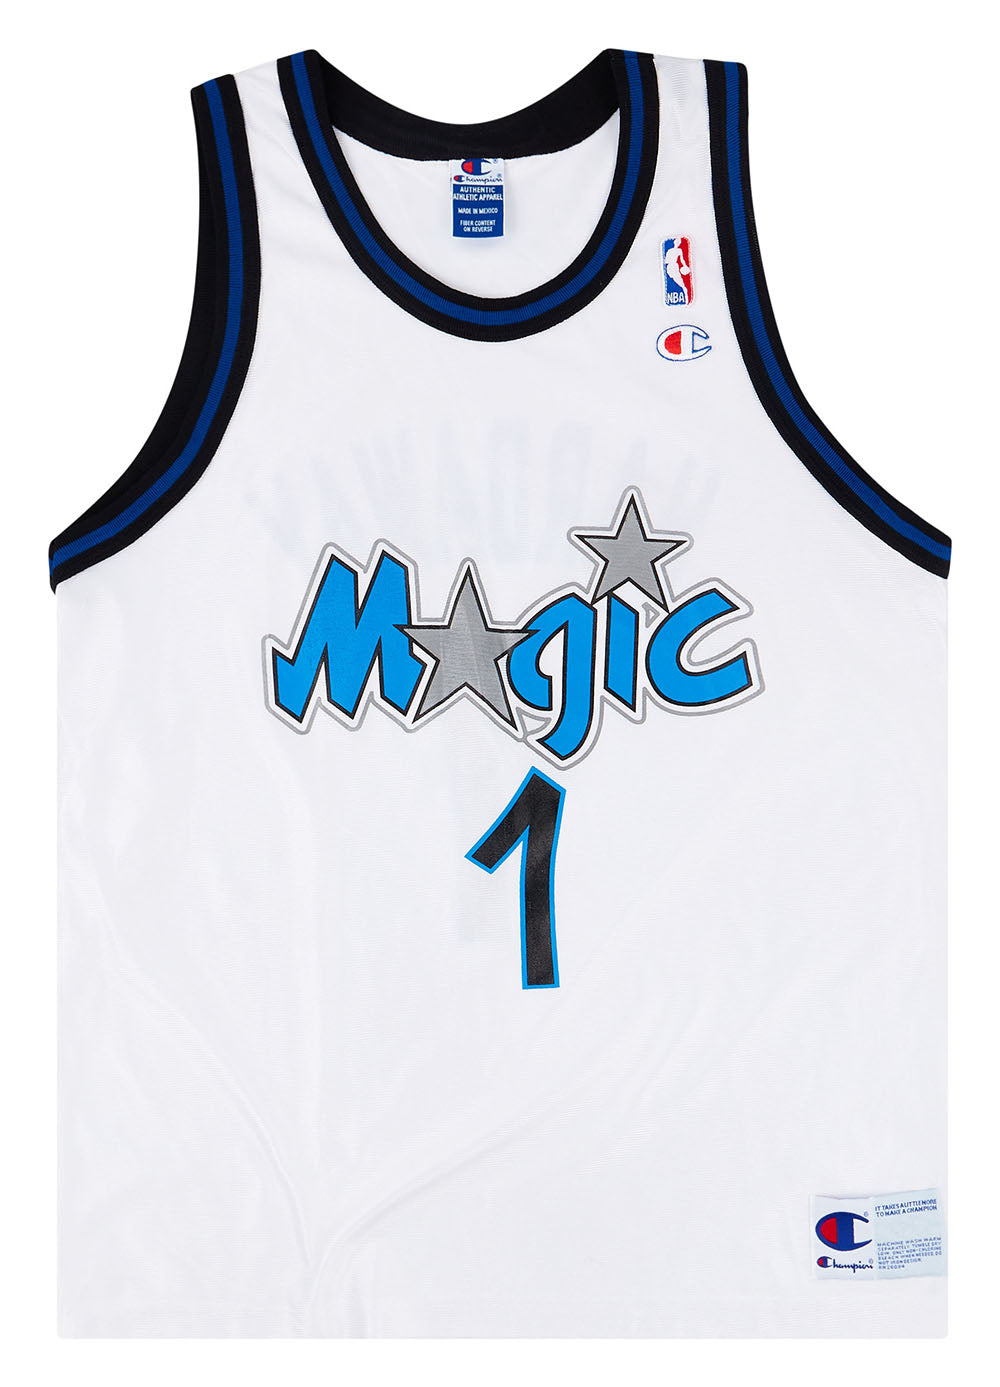 Orlando Magic Alternate Uniform  Nba outfit, Orlando magic, Nba uniforms